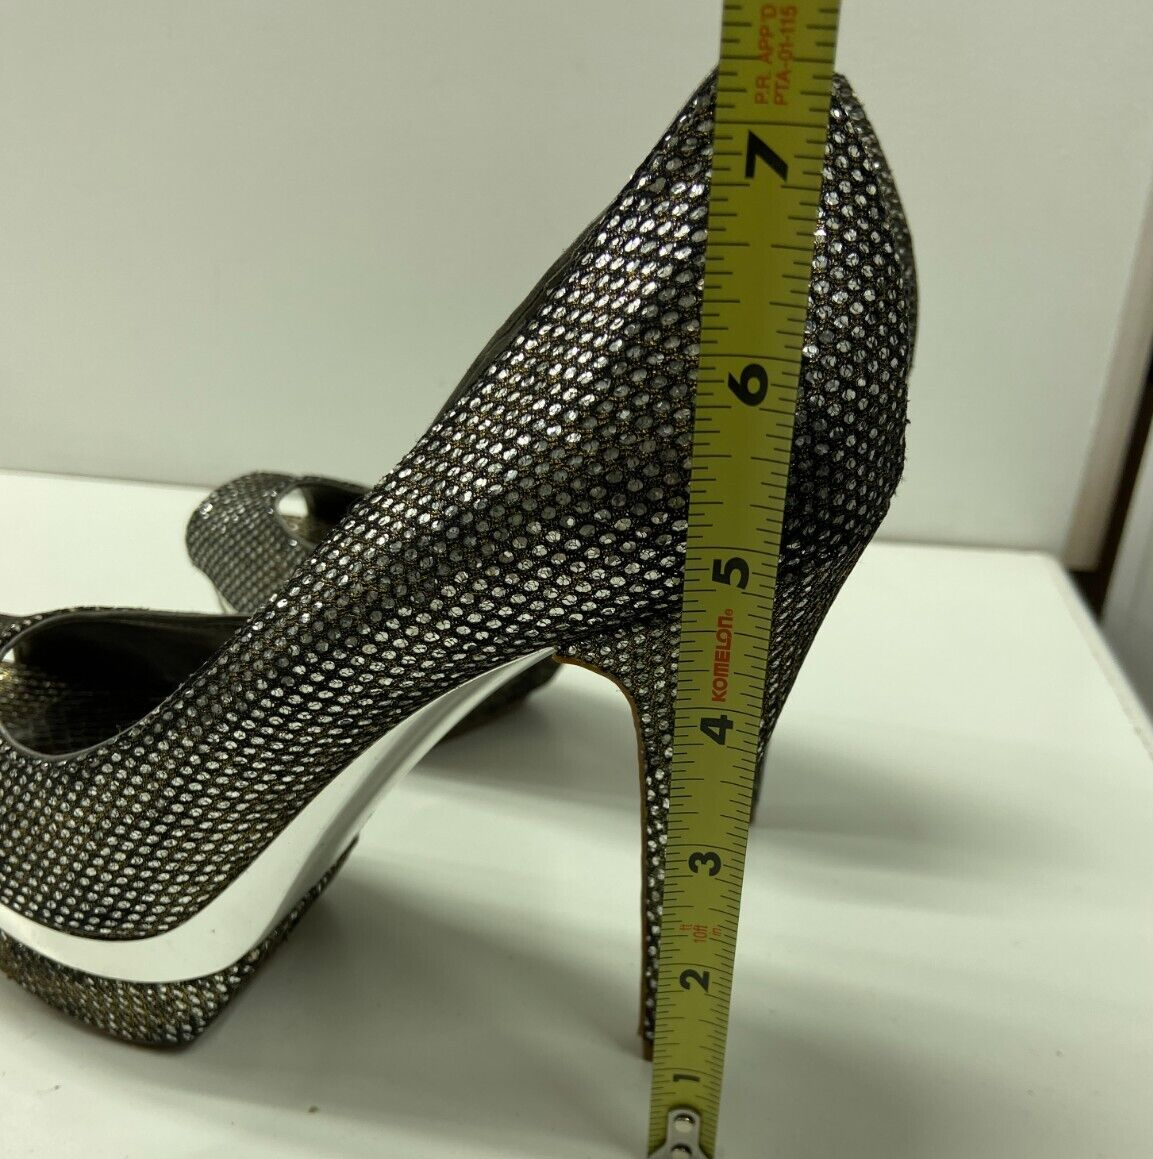 BARRATS Size 5 Black 6 inch high heel platform shoes | eBay